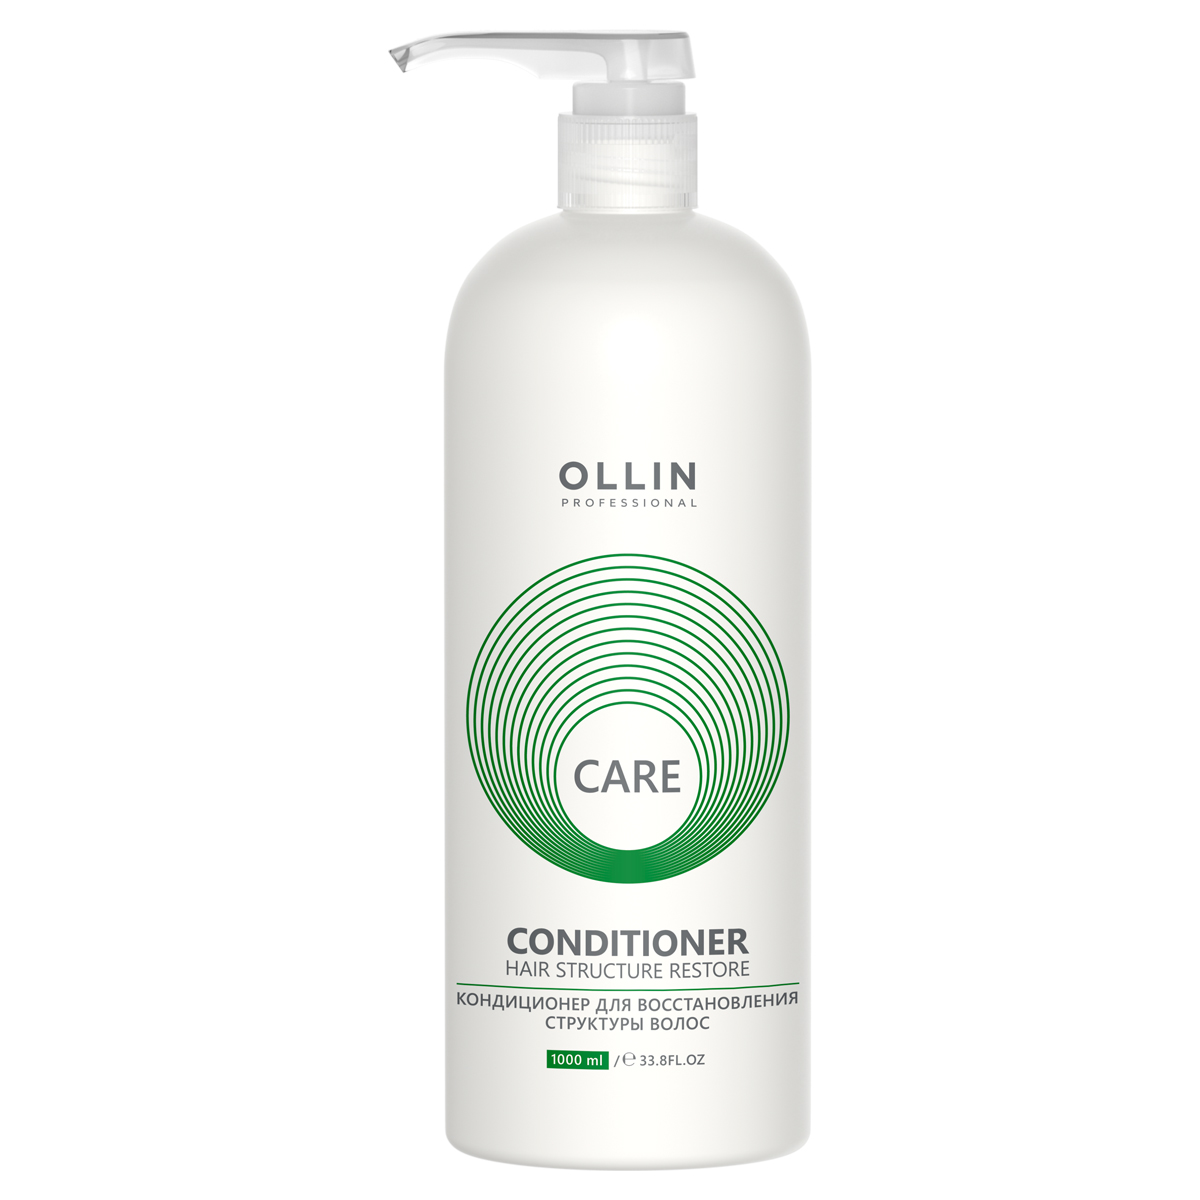 Ollin Professional Кондиционер для восстановления структуры волос, 1000 мл (Ollin Professional, Care) шампунь для восстановления структуры волос ollin professional care 1000 мл